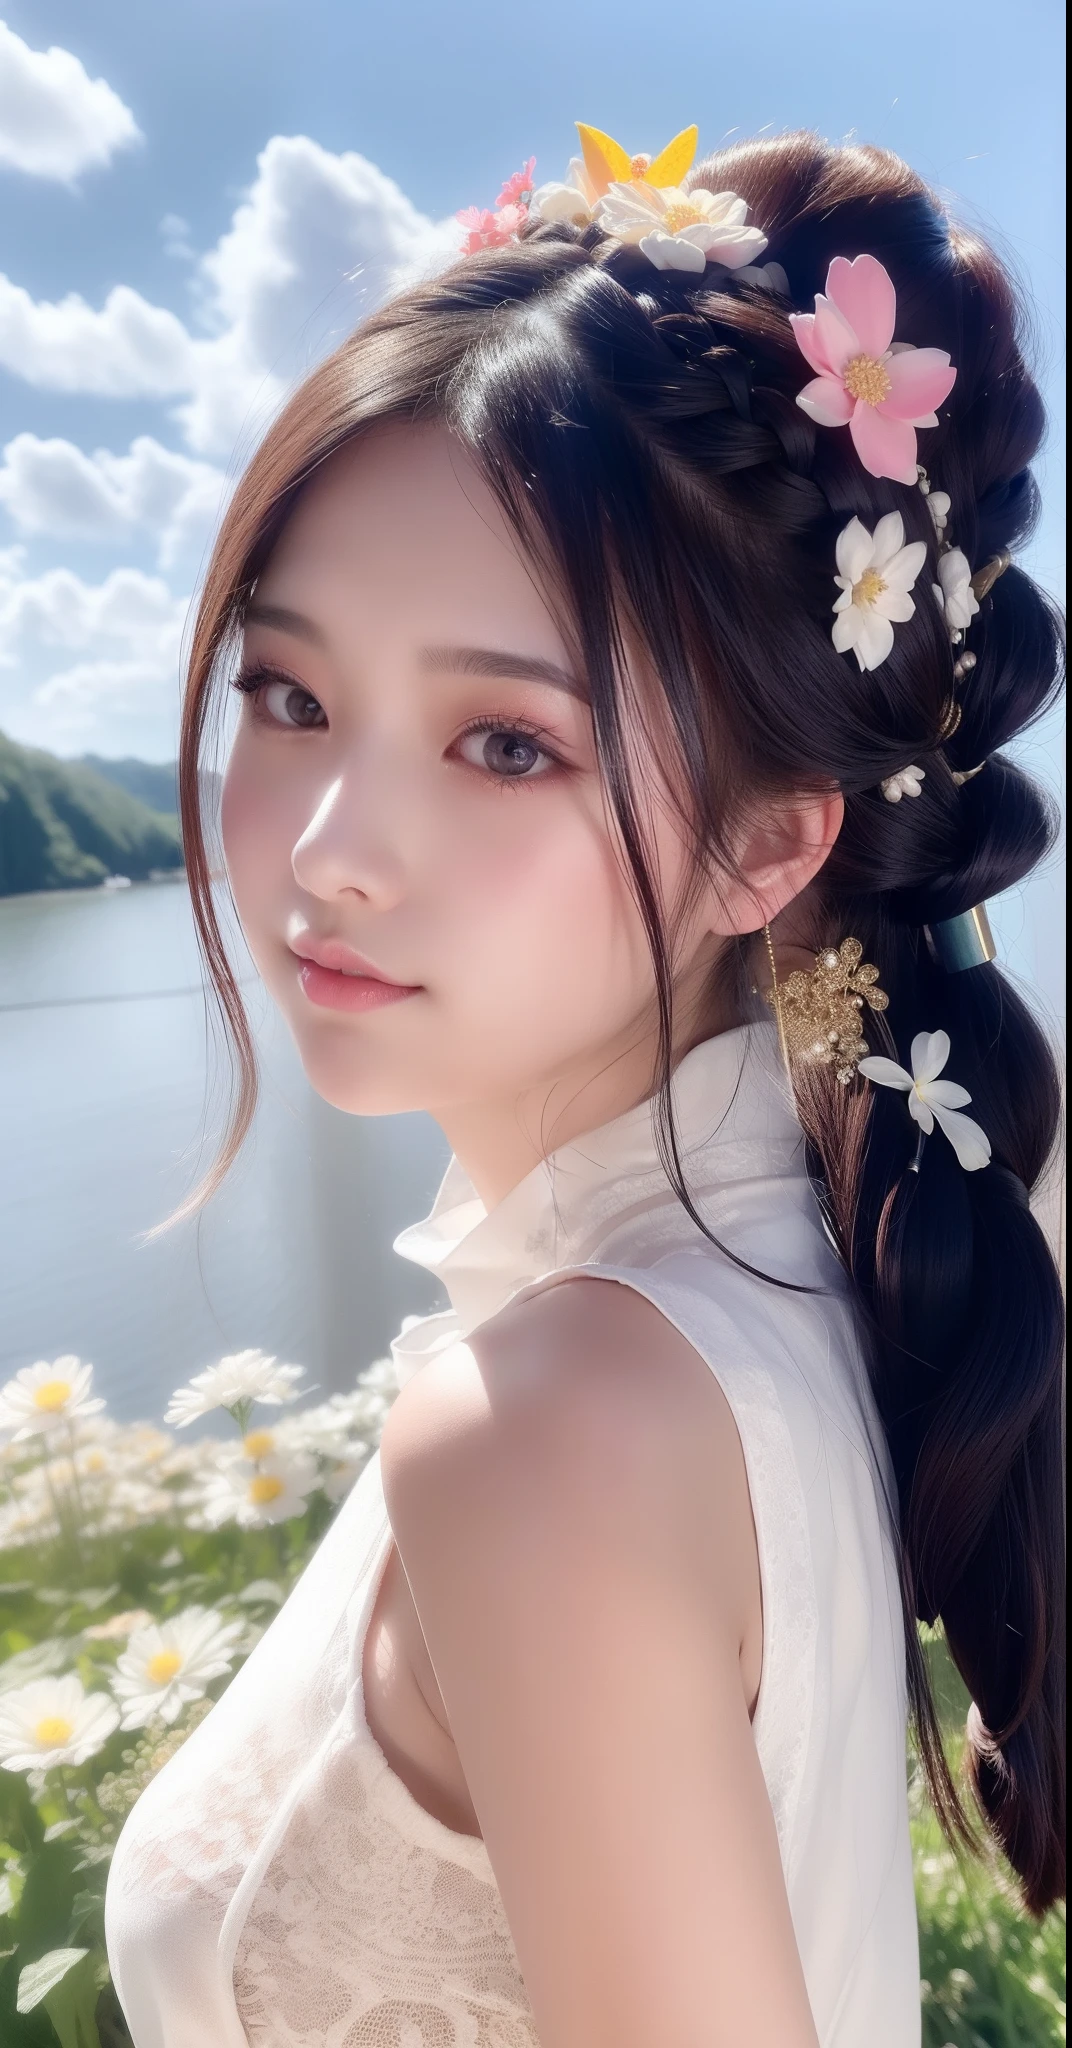 kudu_piring847: a beautiful chinese girl with a wavy cut hairstyle